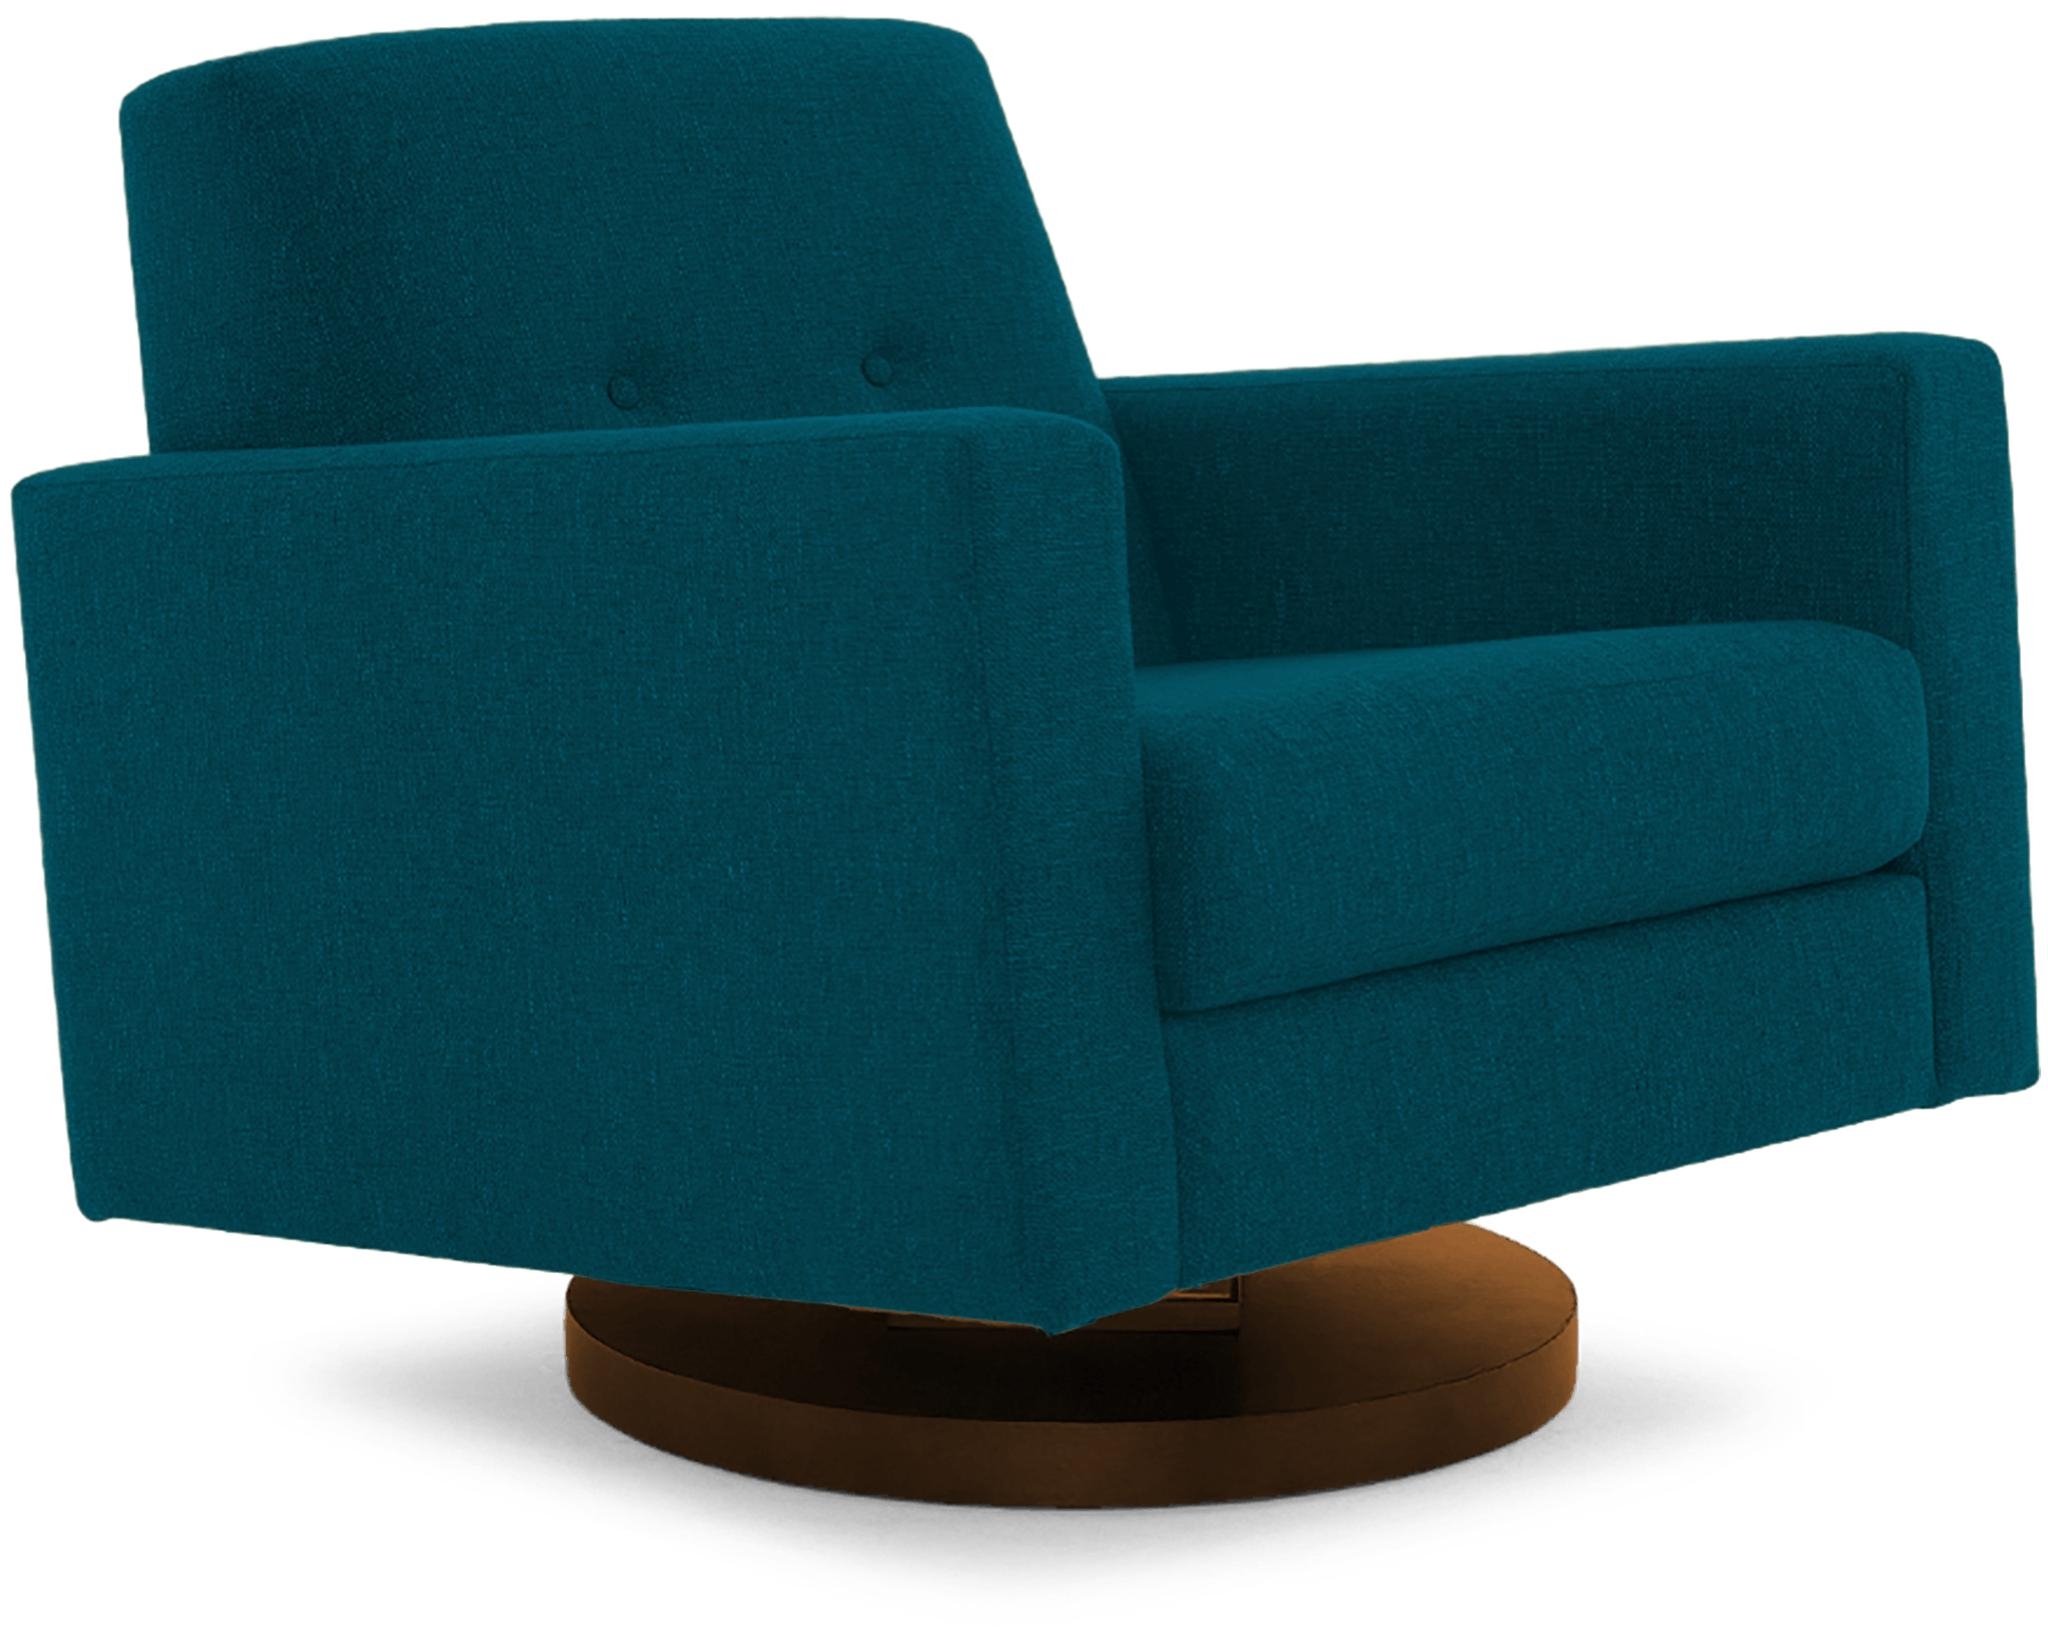 Blue Korver Mid Century Modern Swivel Chair - Key Largo Zenith Teal - Mocha - Image 1